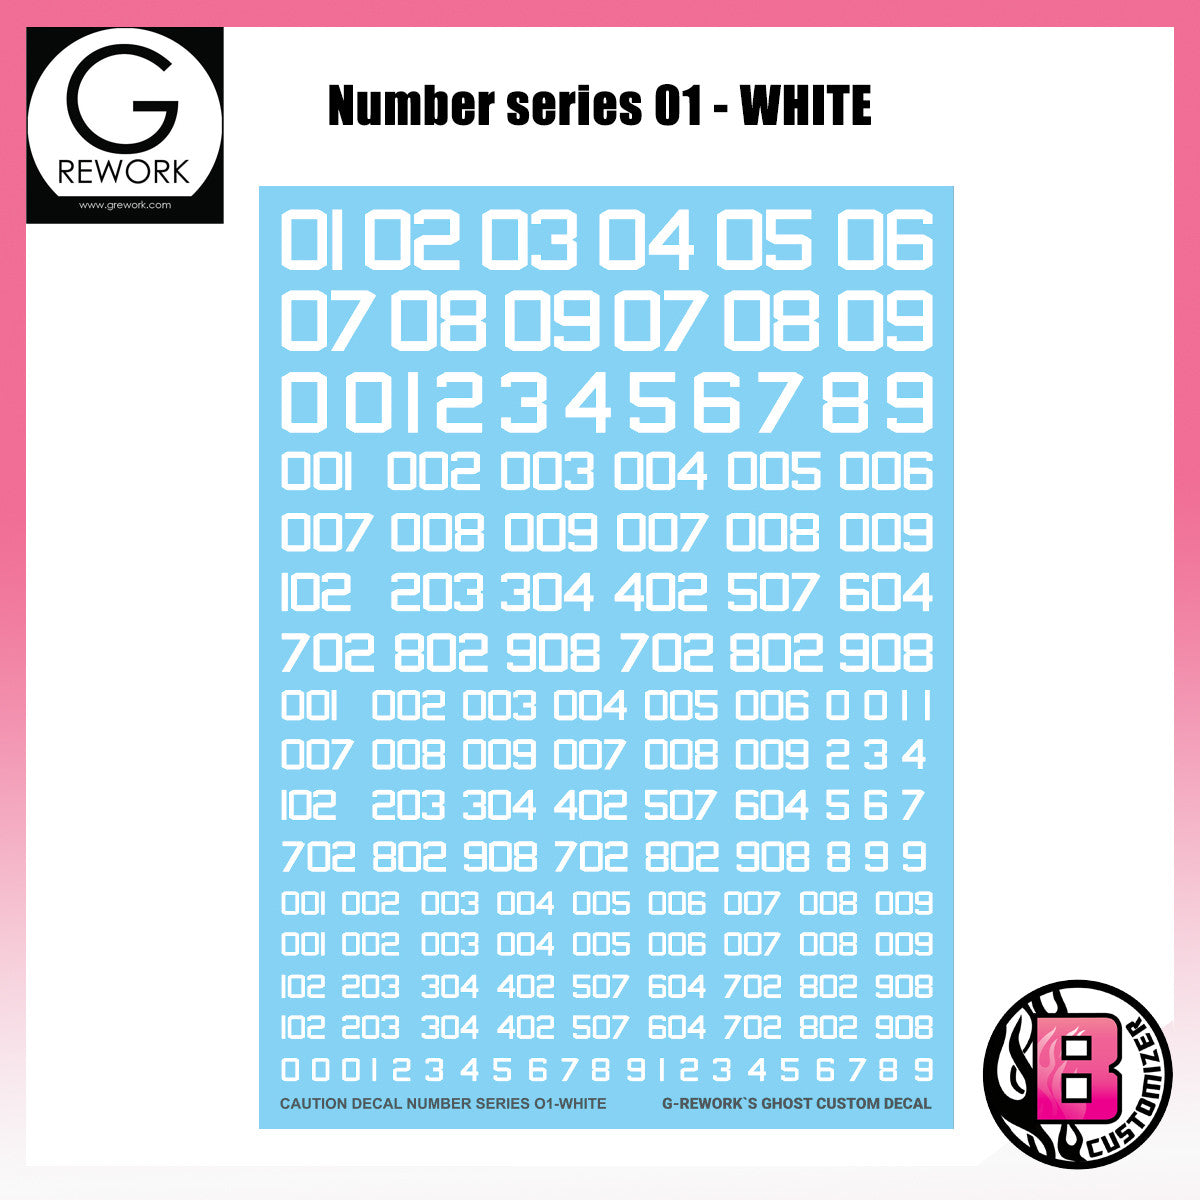 G-Rework CAUTION NUMBER SERIES 01-WHITE